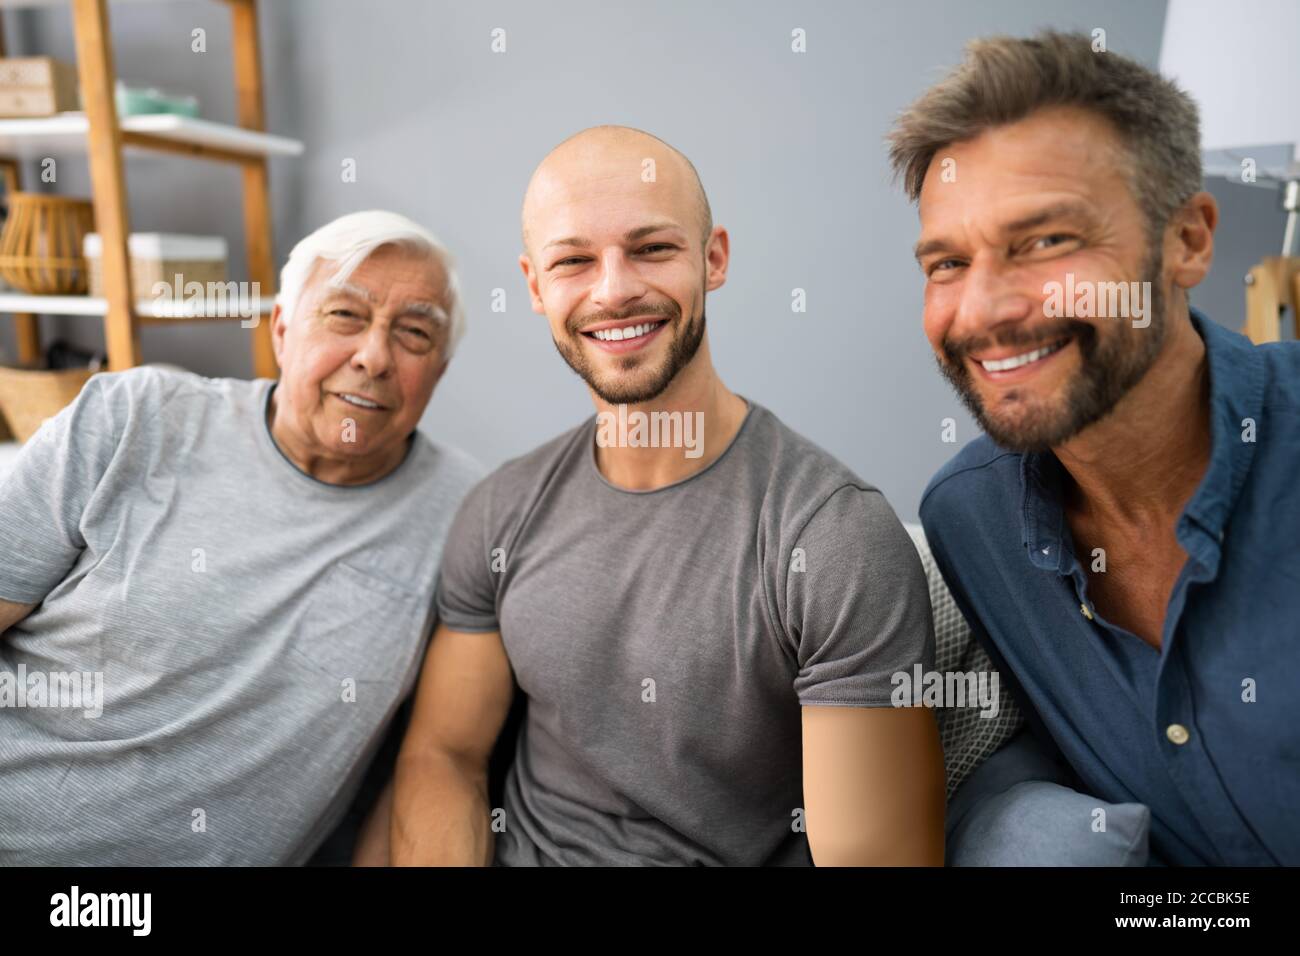 Three Generation Men Family Portraits Front View Stock Photo